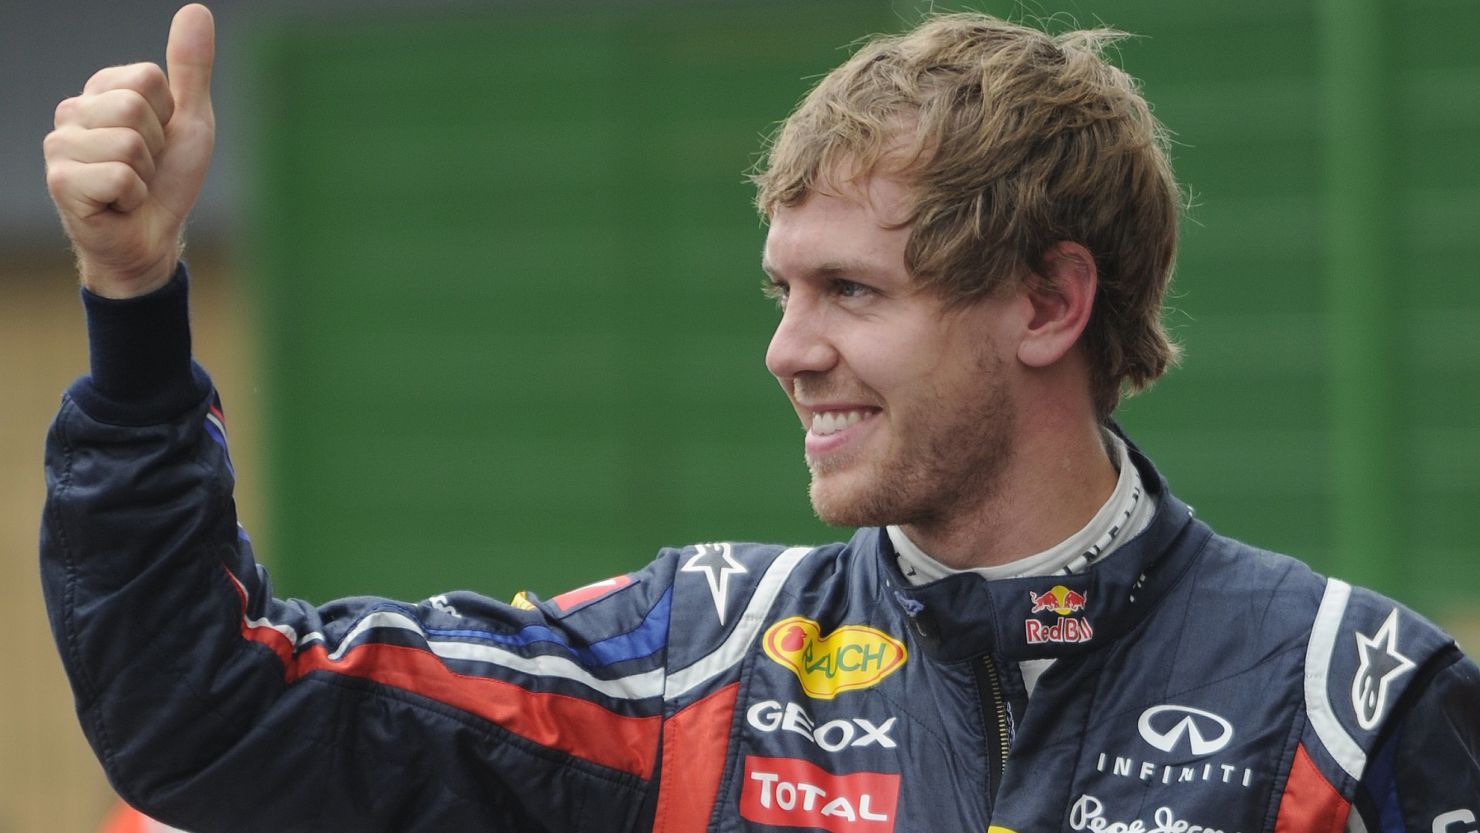 World champion Sebastian Vettel celebrates winning his record 15th pole position this season at Interlagos on Saturday.